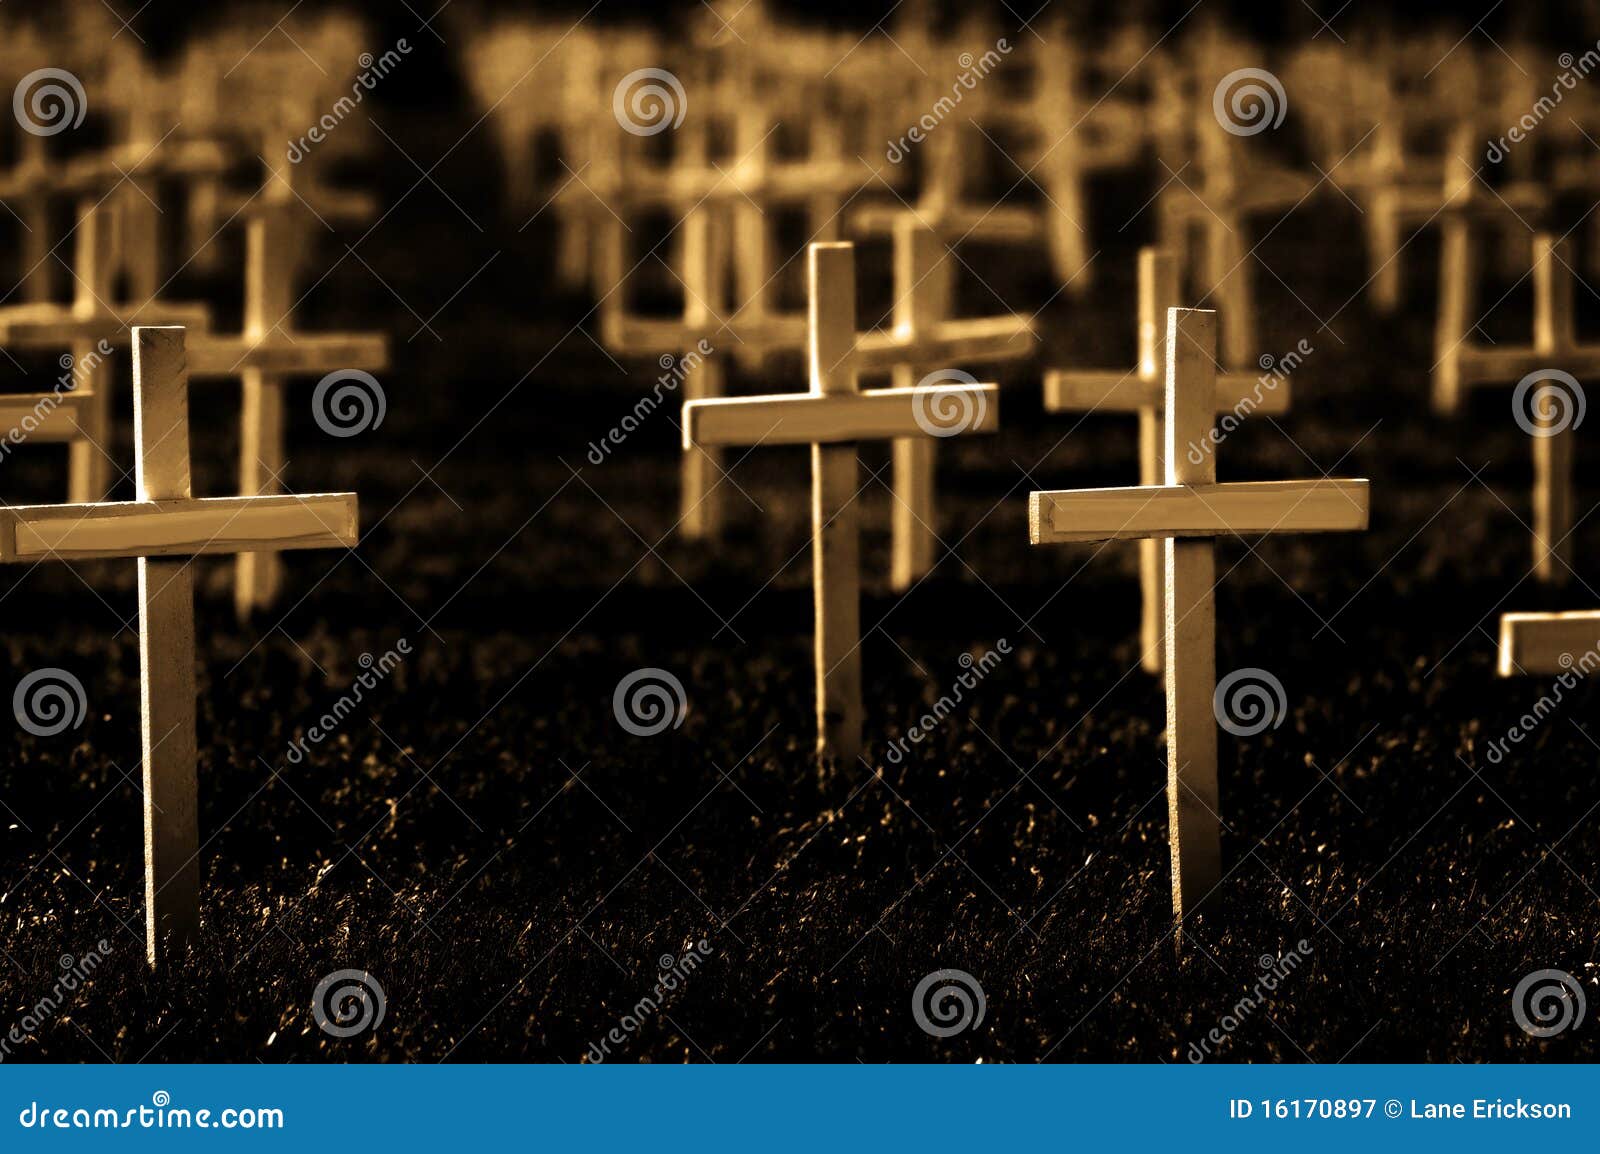 rows of crosses